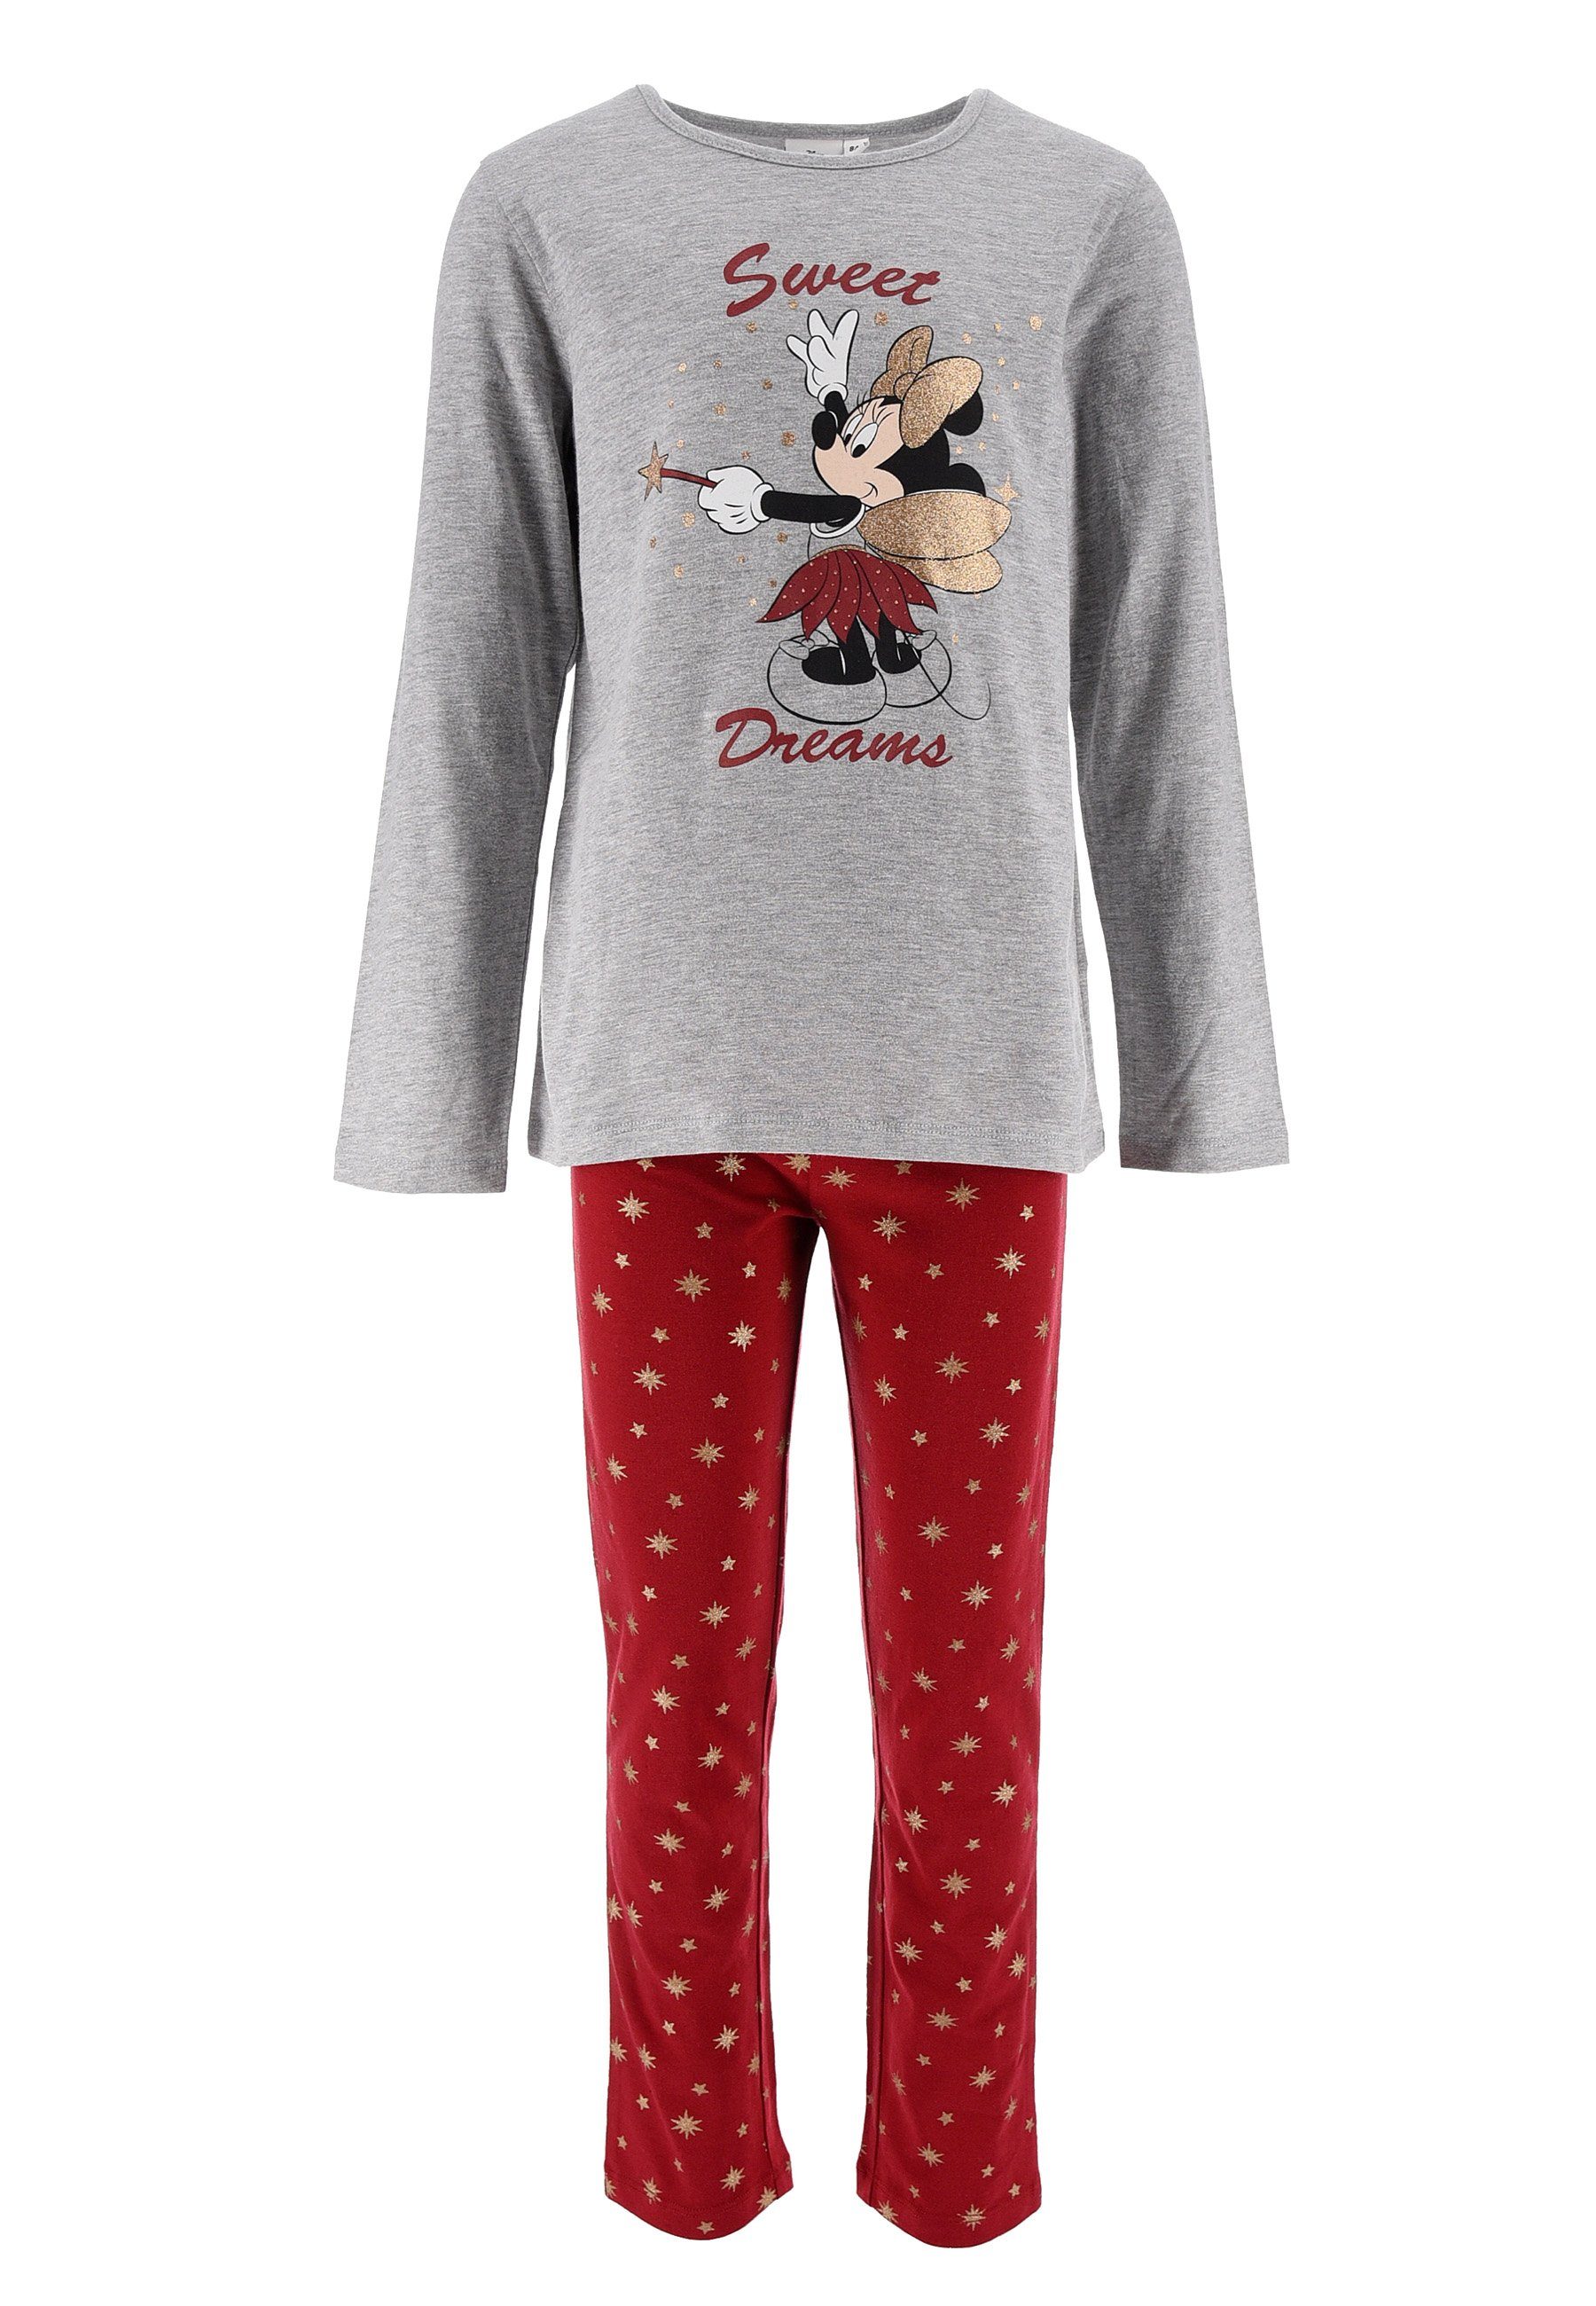 + tlg) Kinder Schlafanzug Grau Schlaf-Hose Mädchen Mini Shirt Langarm Disney Mouse (2 Pyjama Kinder Schlafanzug Minnie Maus